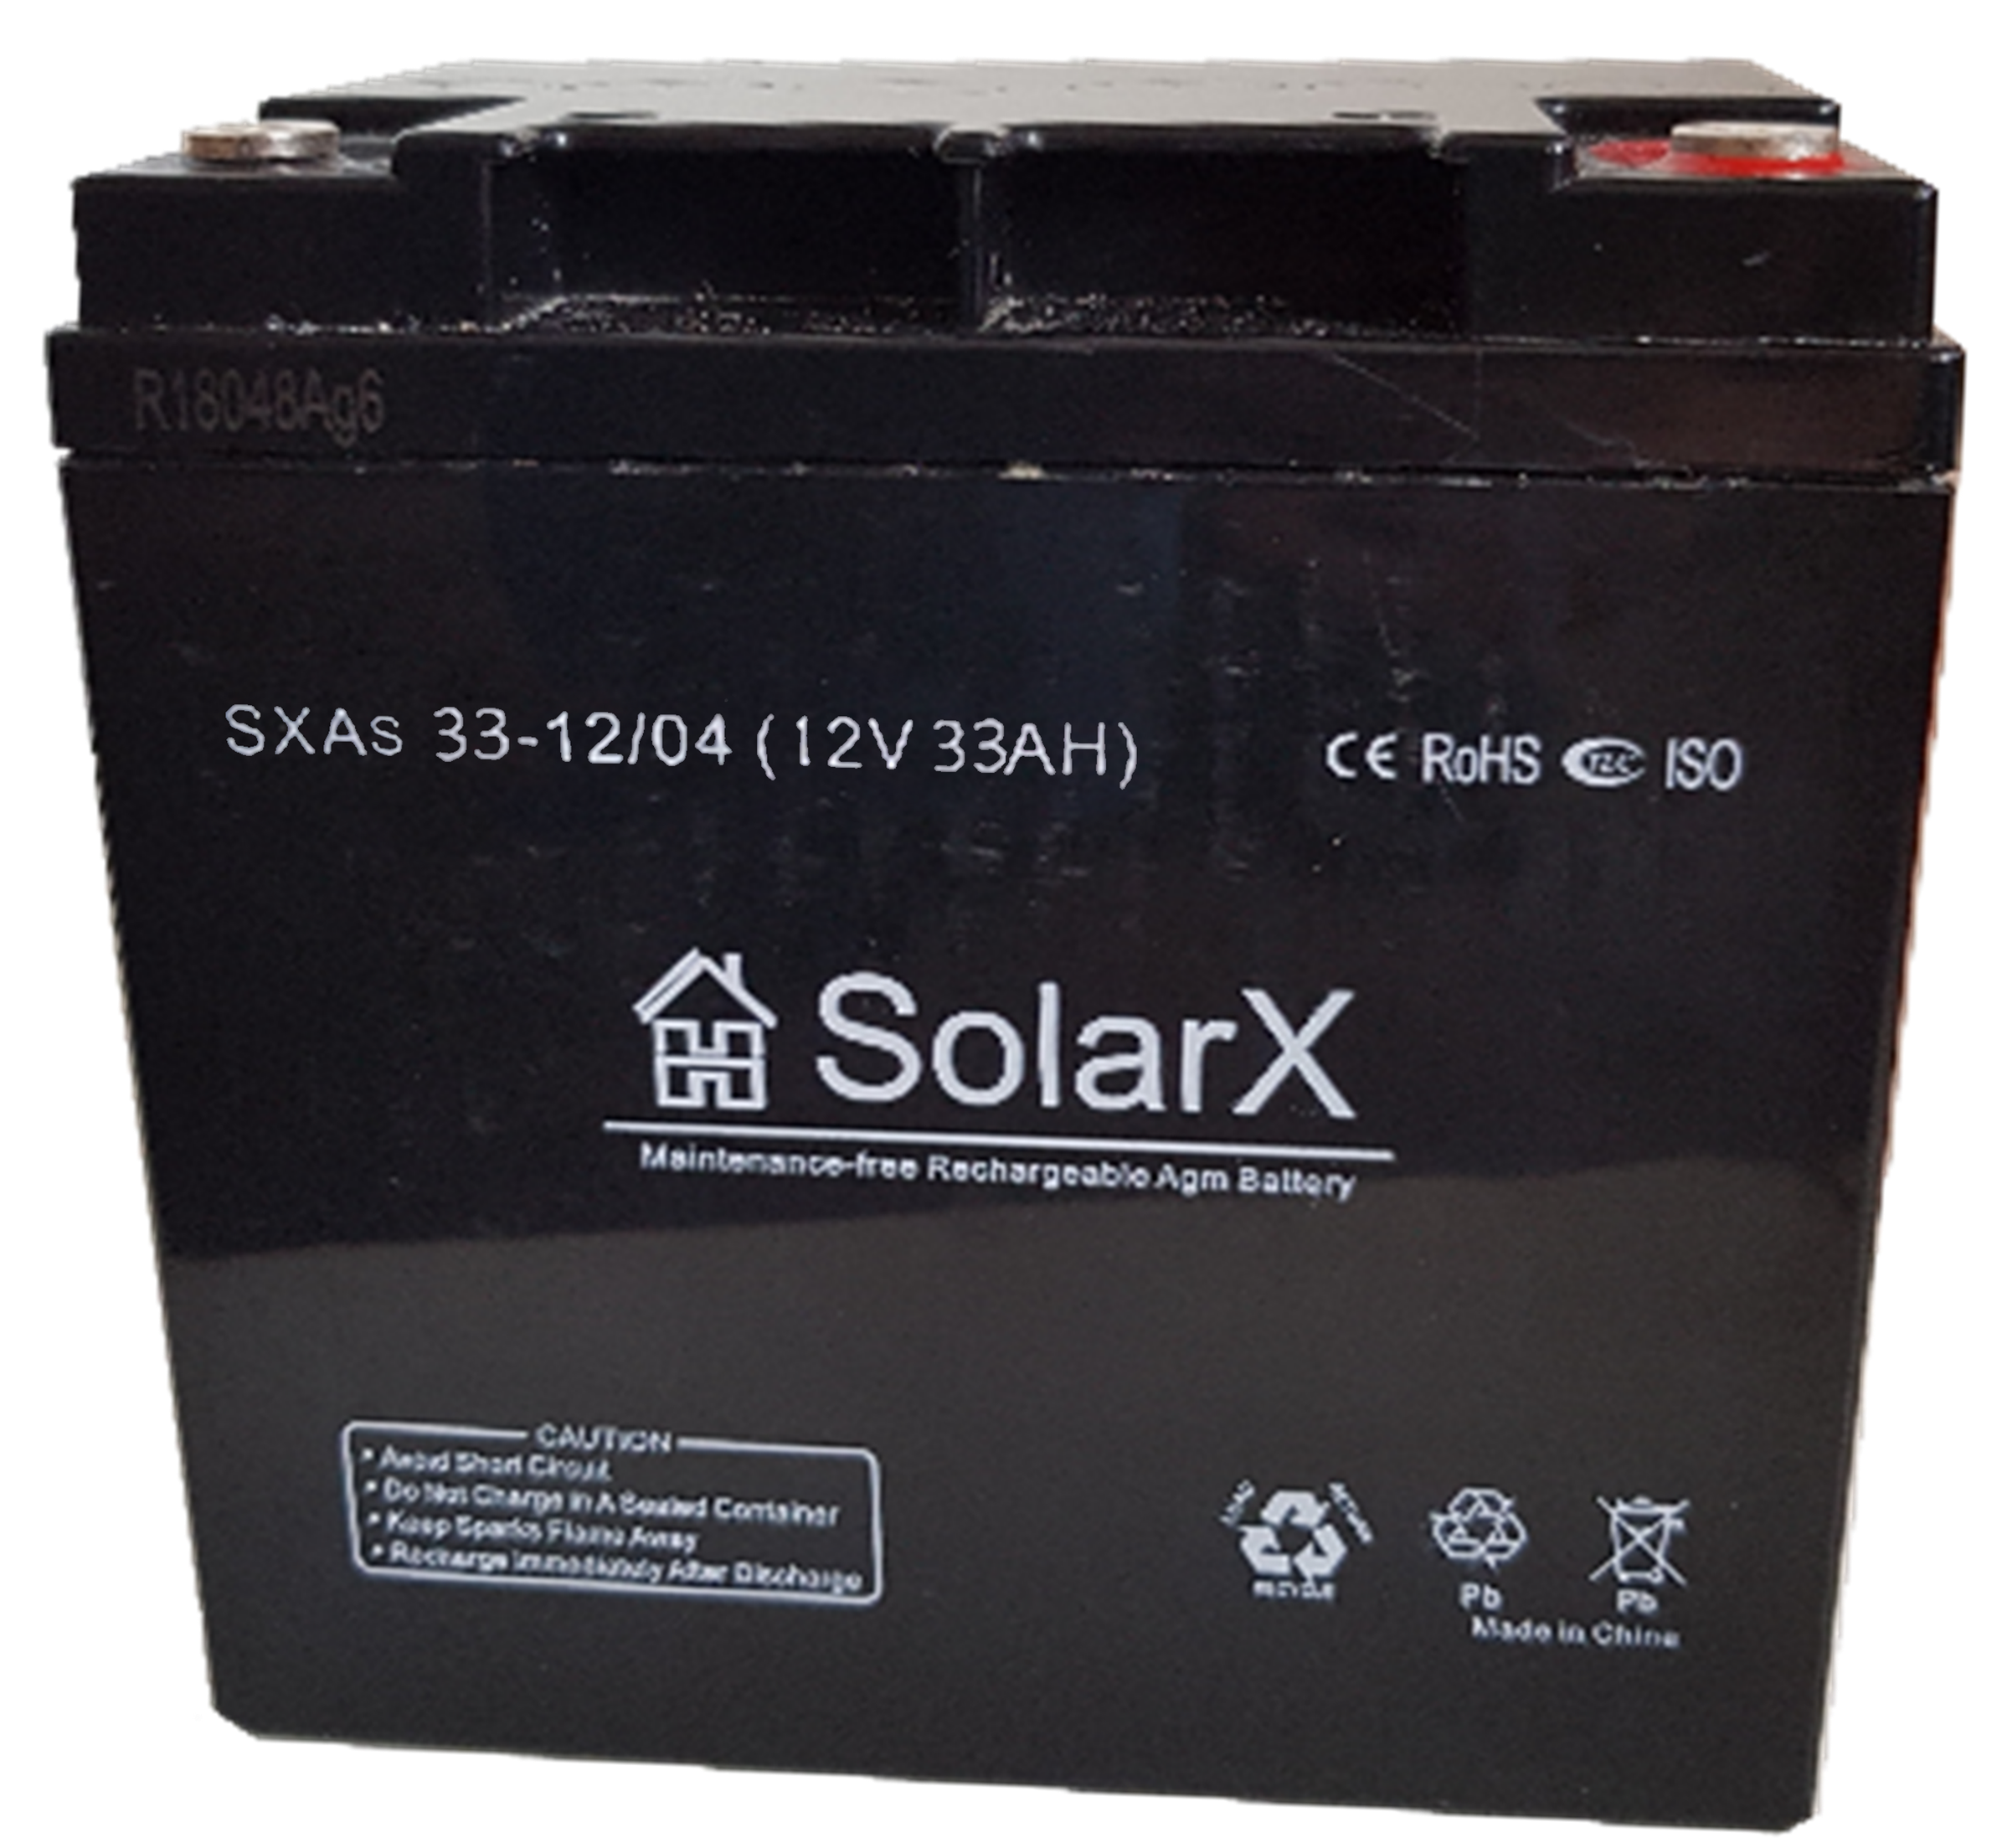 Solarx sxas 33 12